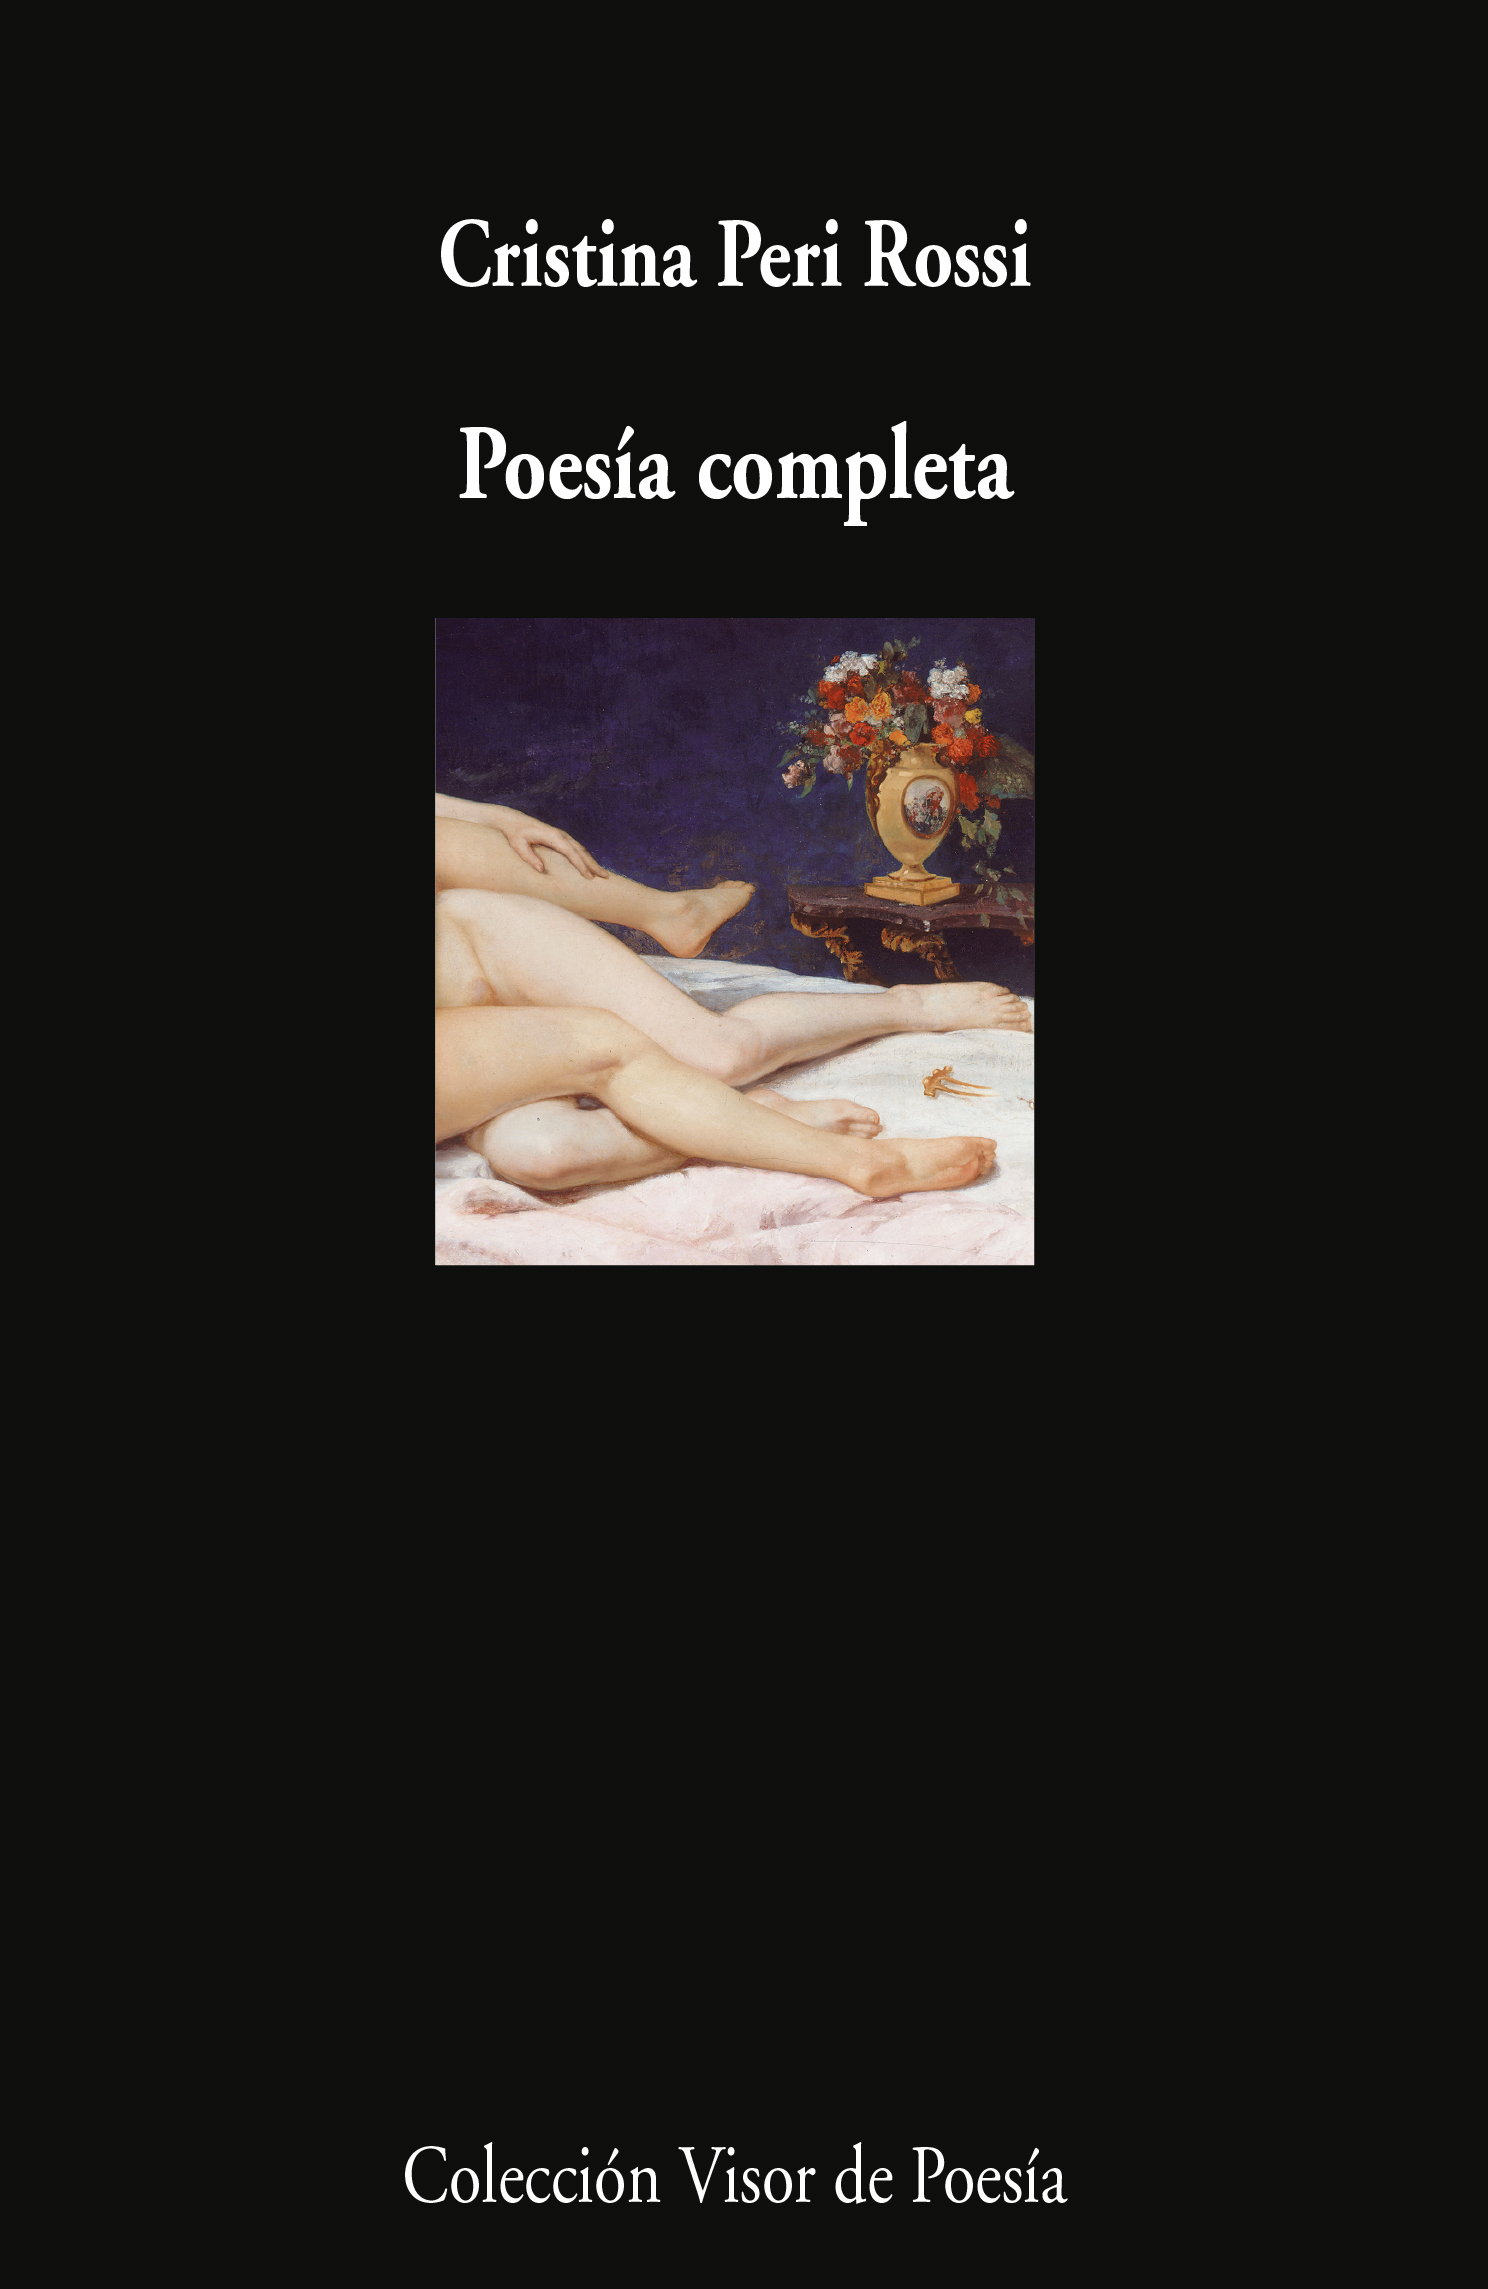 5 poemas de Cristina Peri Rossi